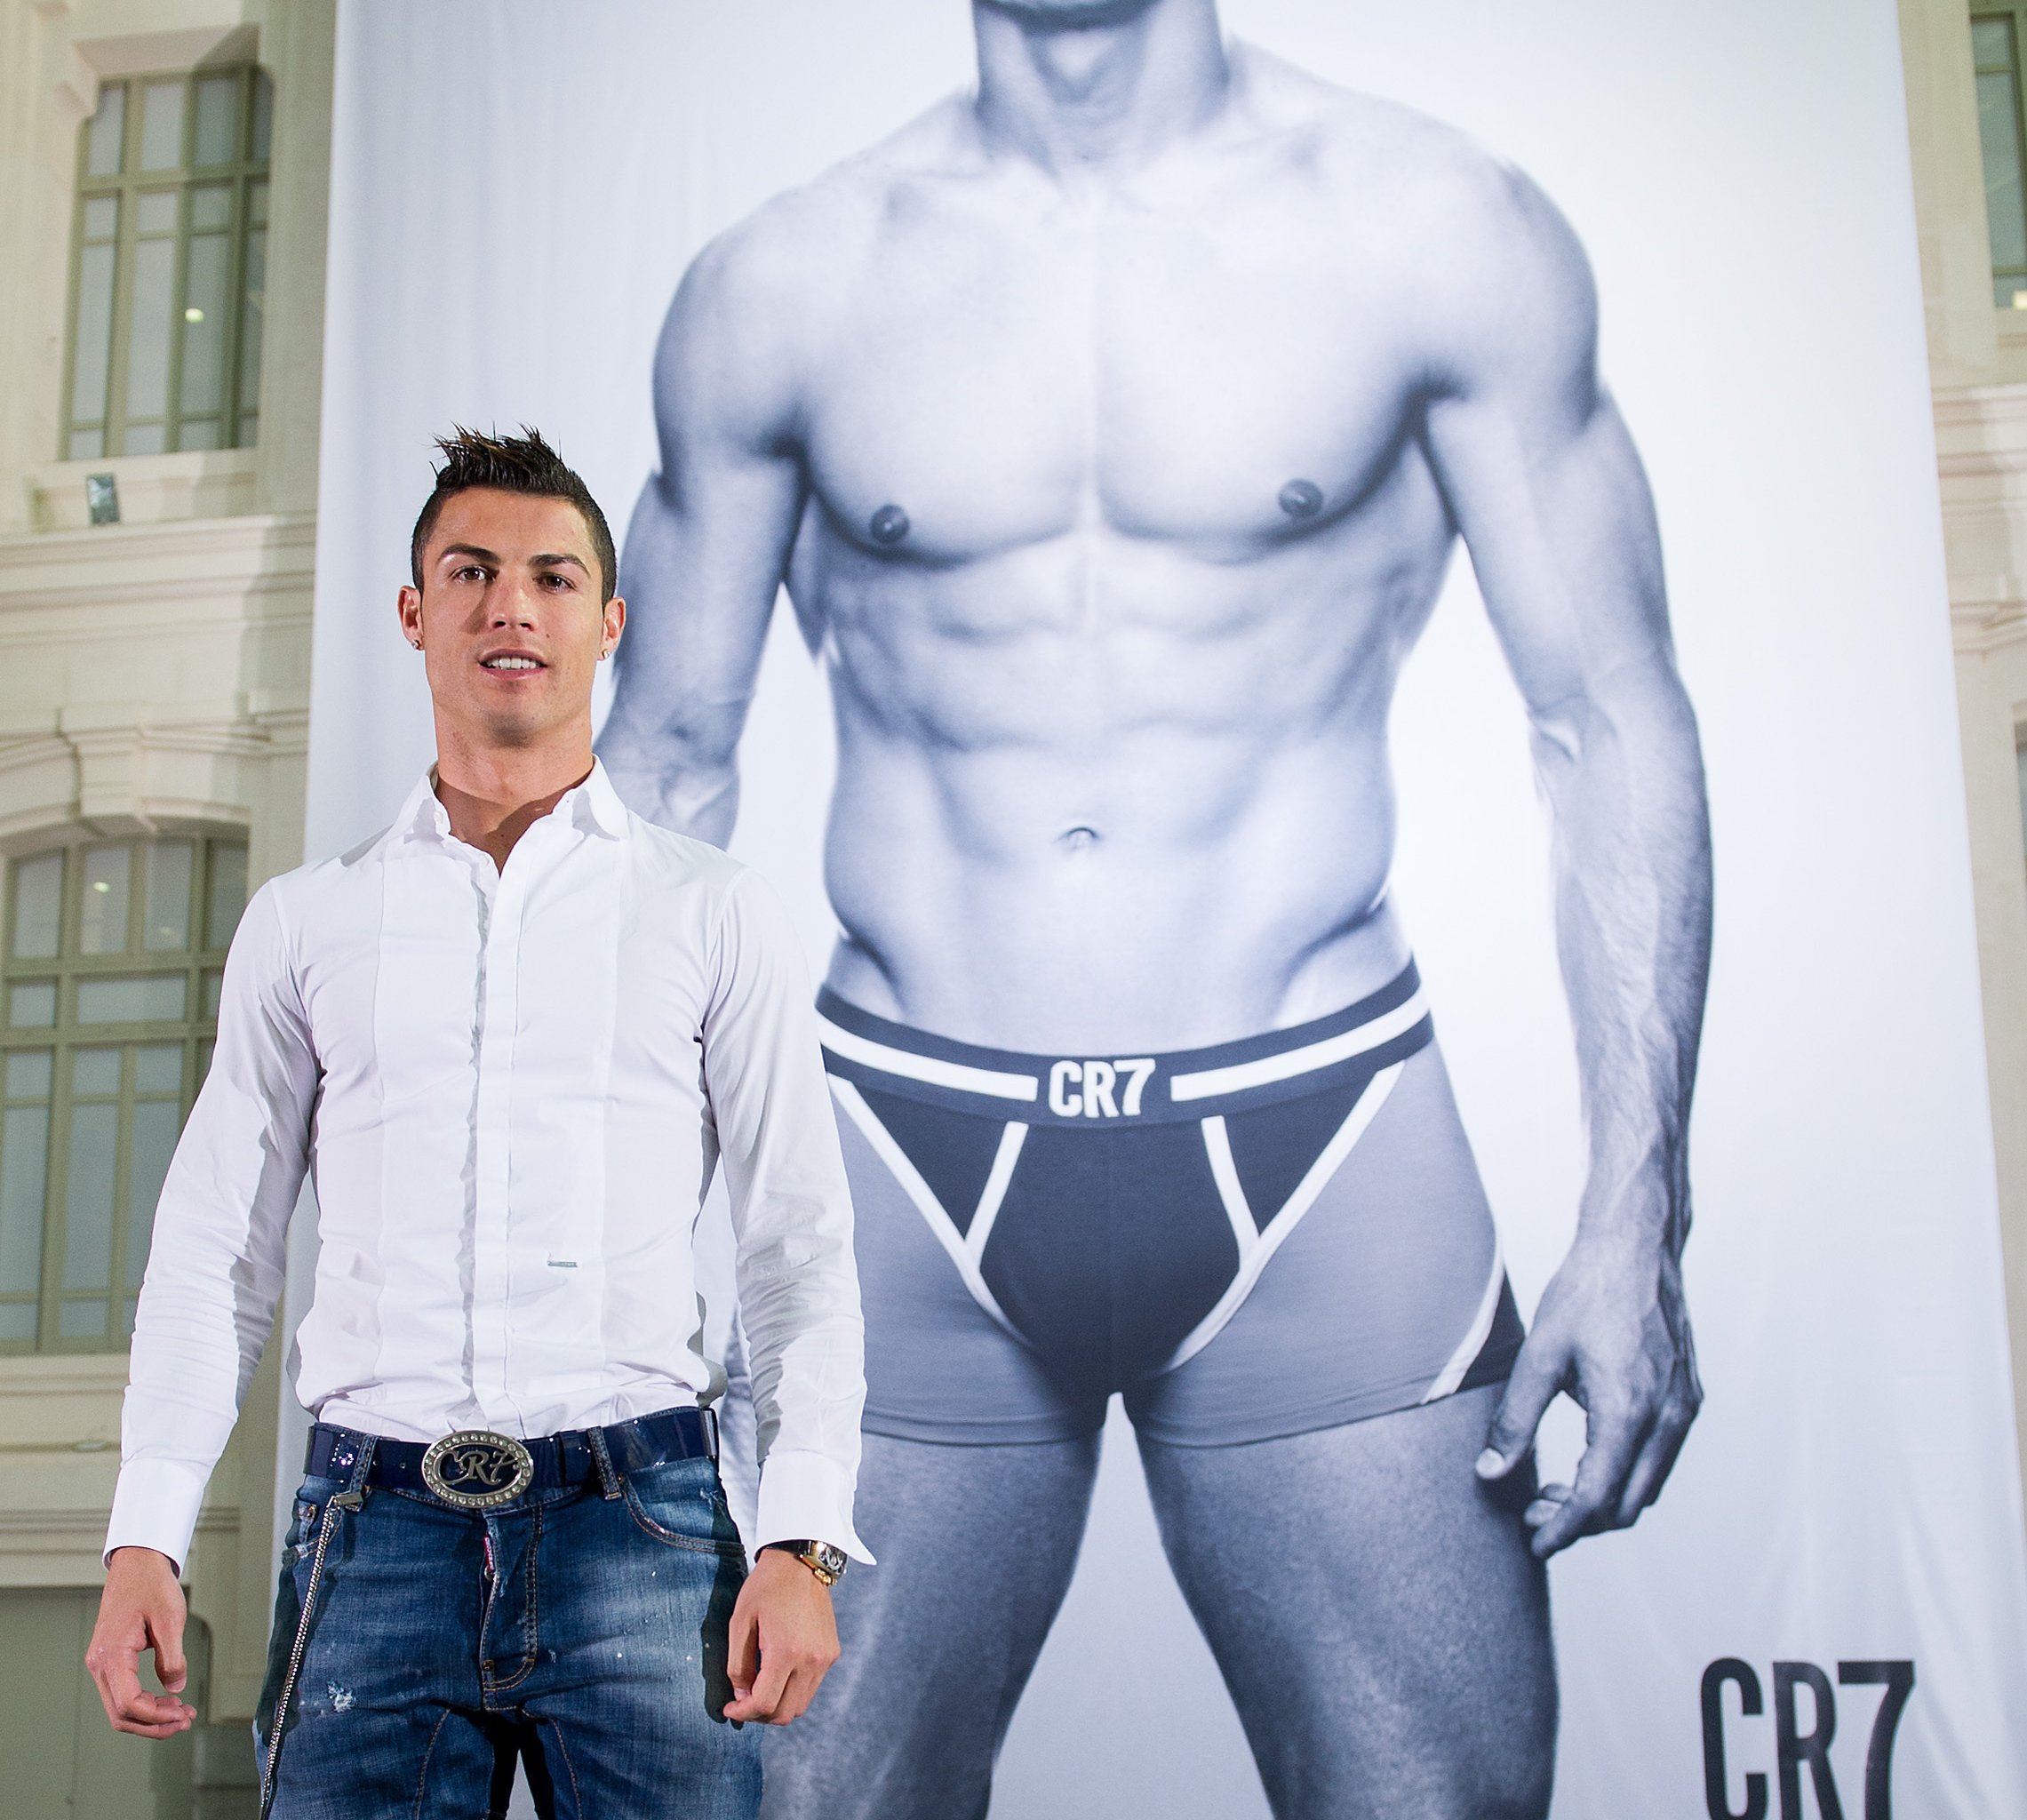 Cristiano Ronaldo launches pants range of underwear